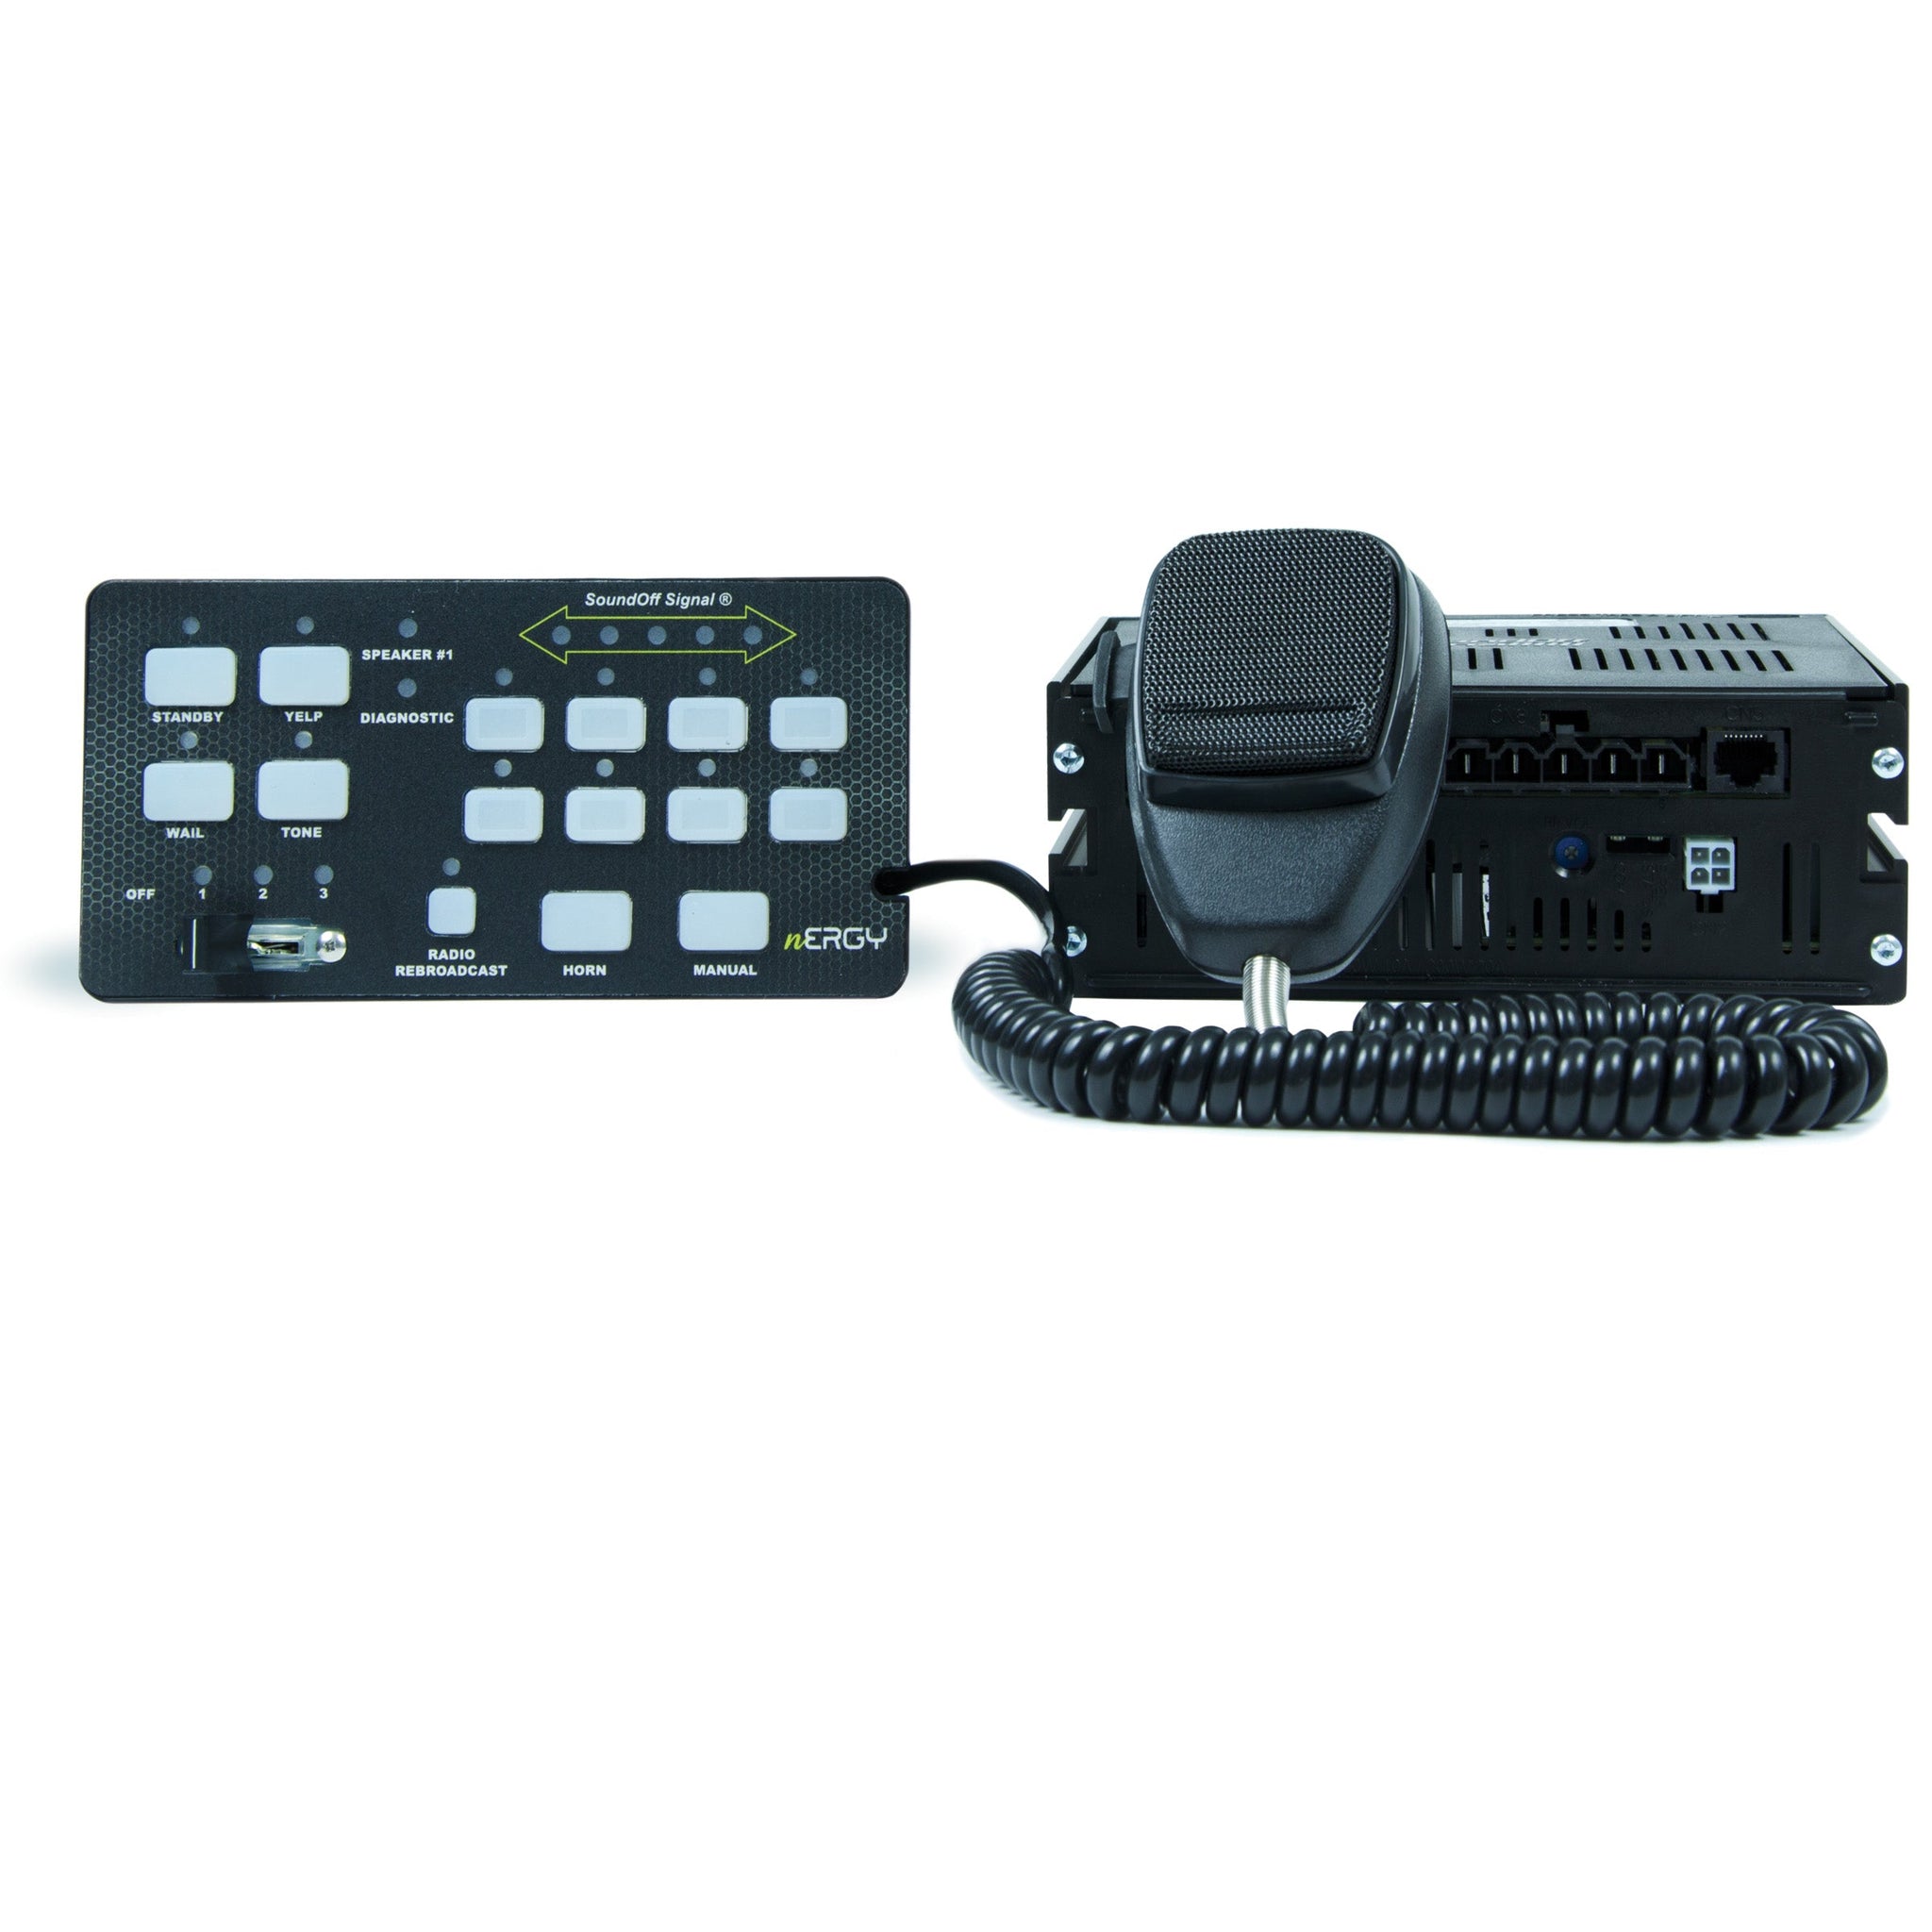 SoundOff Signal nERGY® 400 Series Remote Siren, 200 Watt